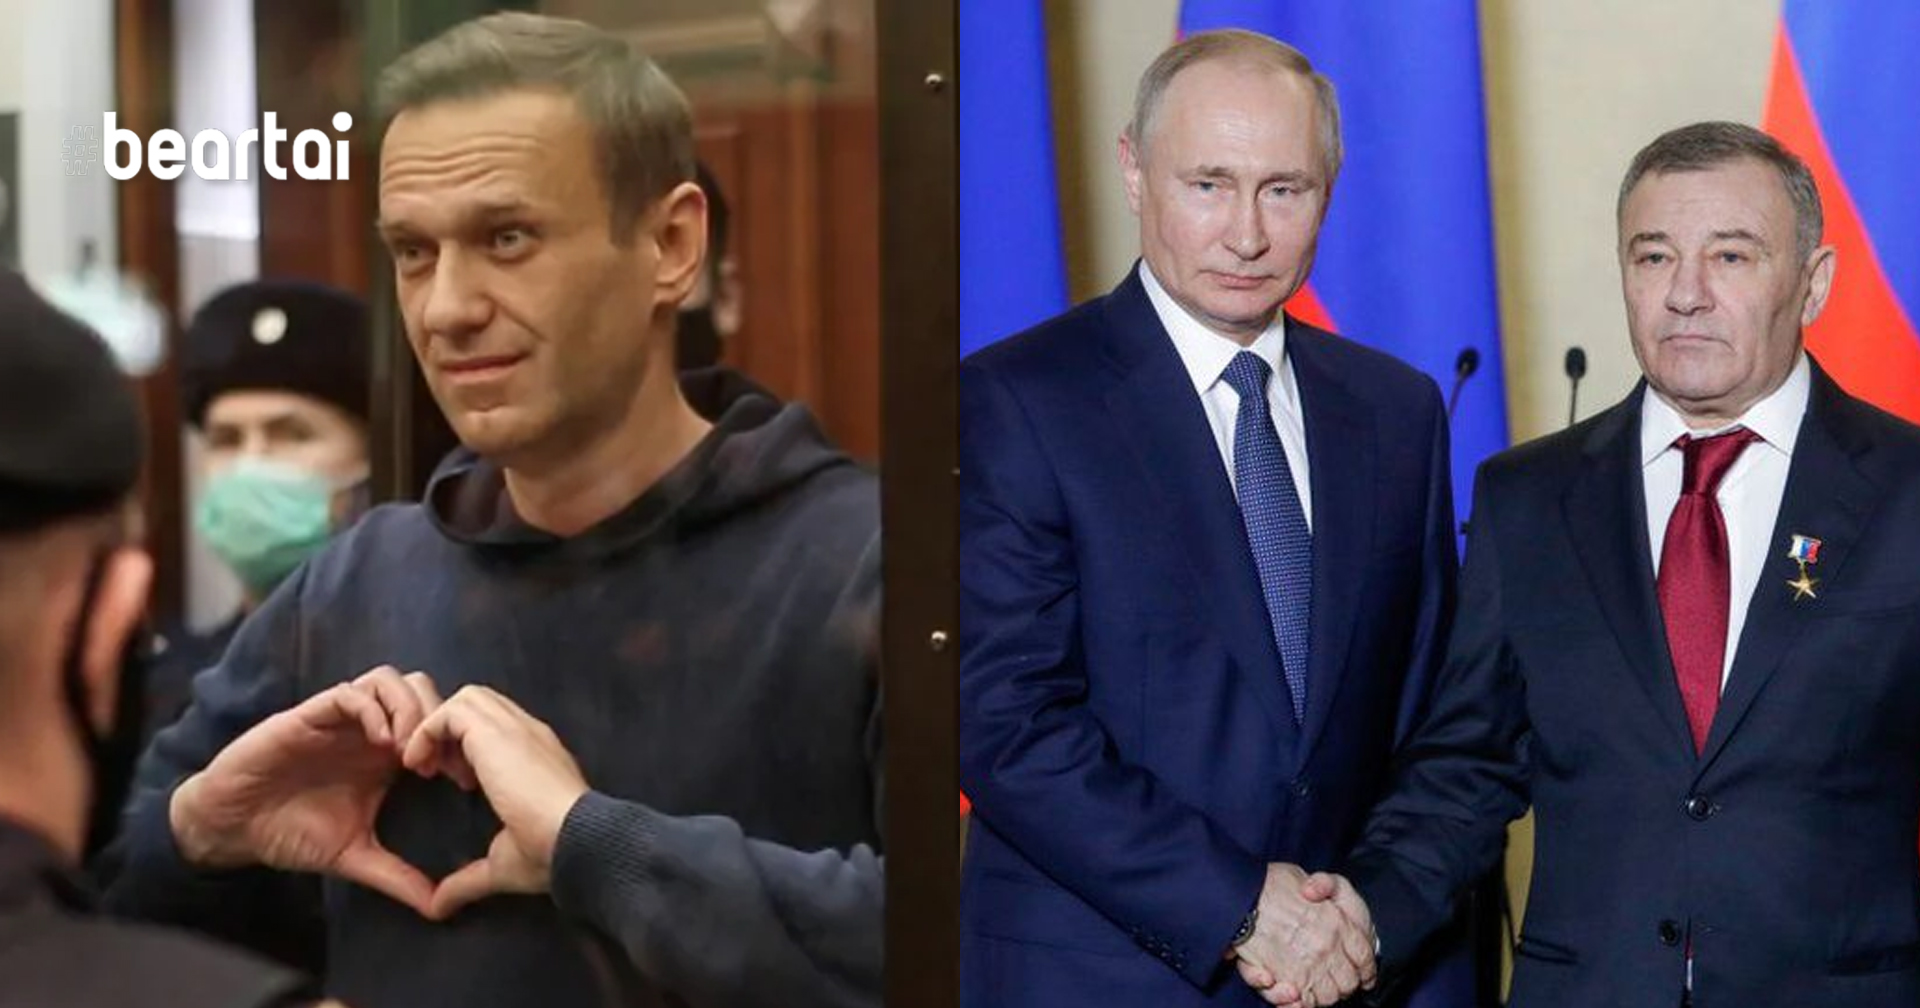 Alexi Navalny ฝ่ายค้านรัสเซียถูกศาลสั่งจำคุก 3 ปีครึ่ง และมหาเศรษฐีเพื่อน Putin ออกมาบอกว่า “พระราชวัง” เป็นของเขาเอง